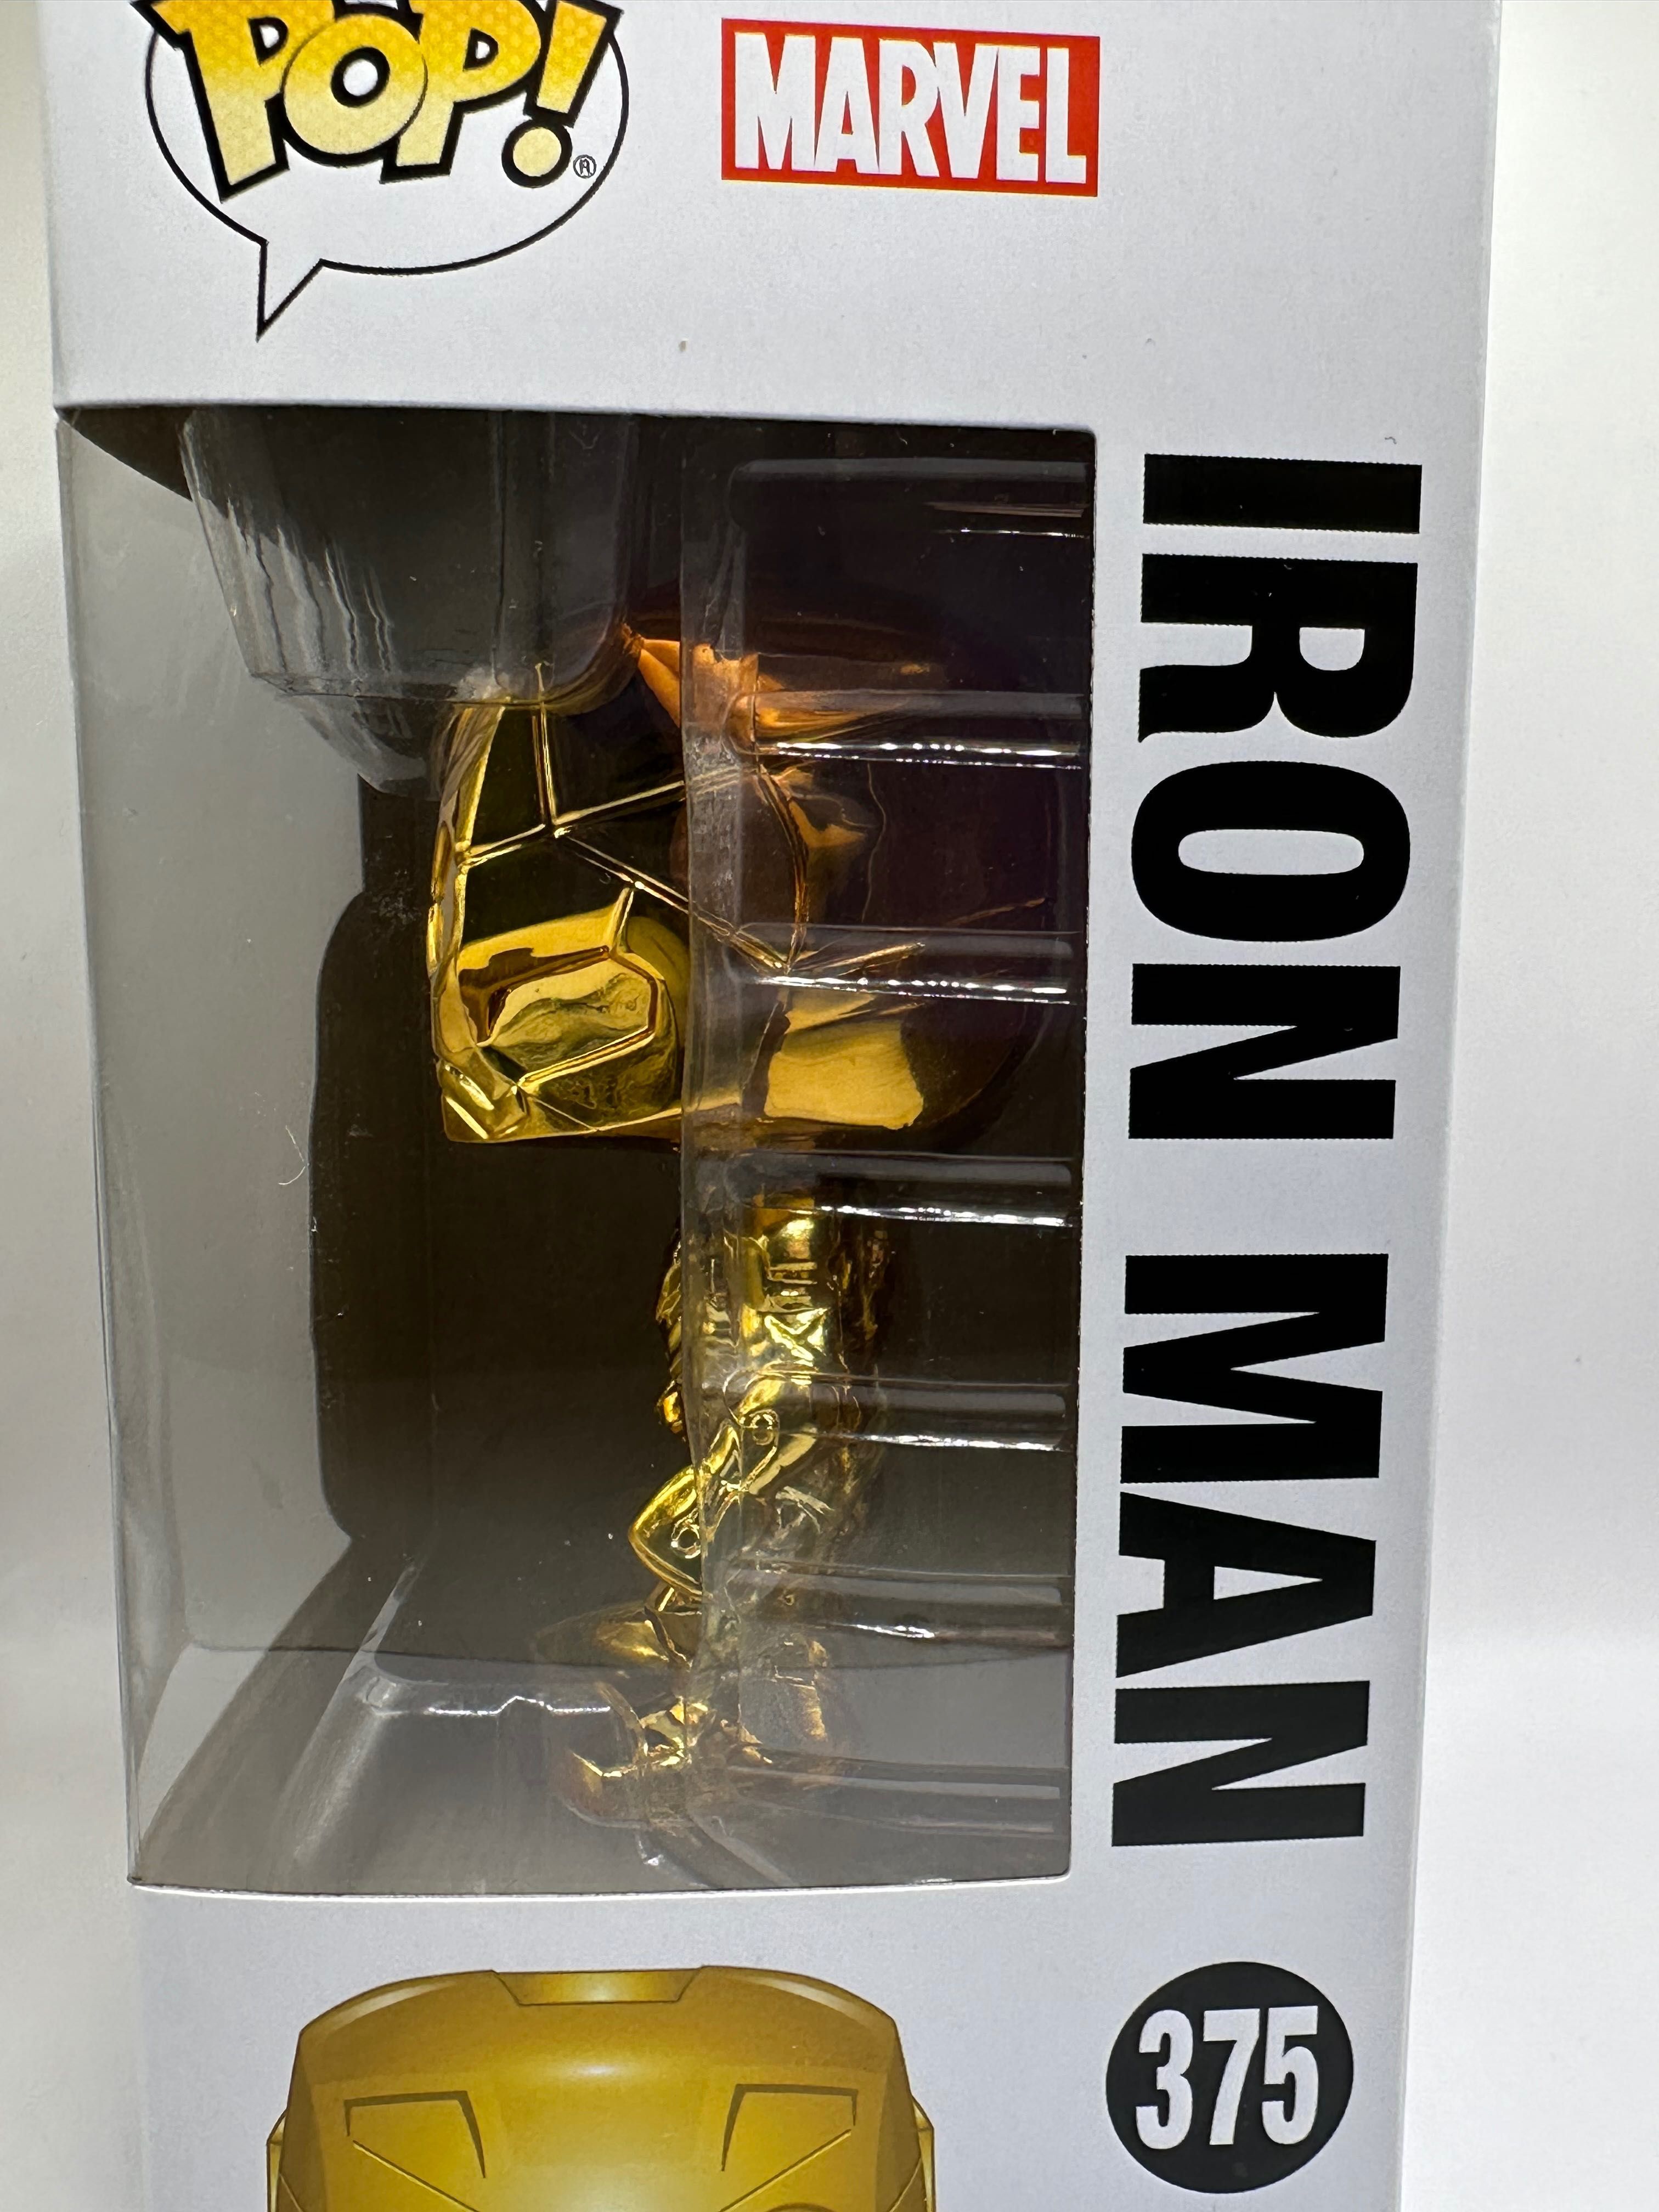 Golden Iron Man Marvel Funko Pop Exclusive Original New#375